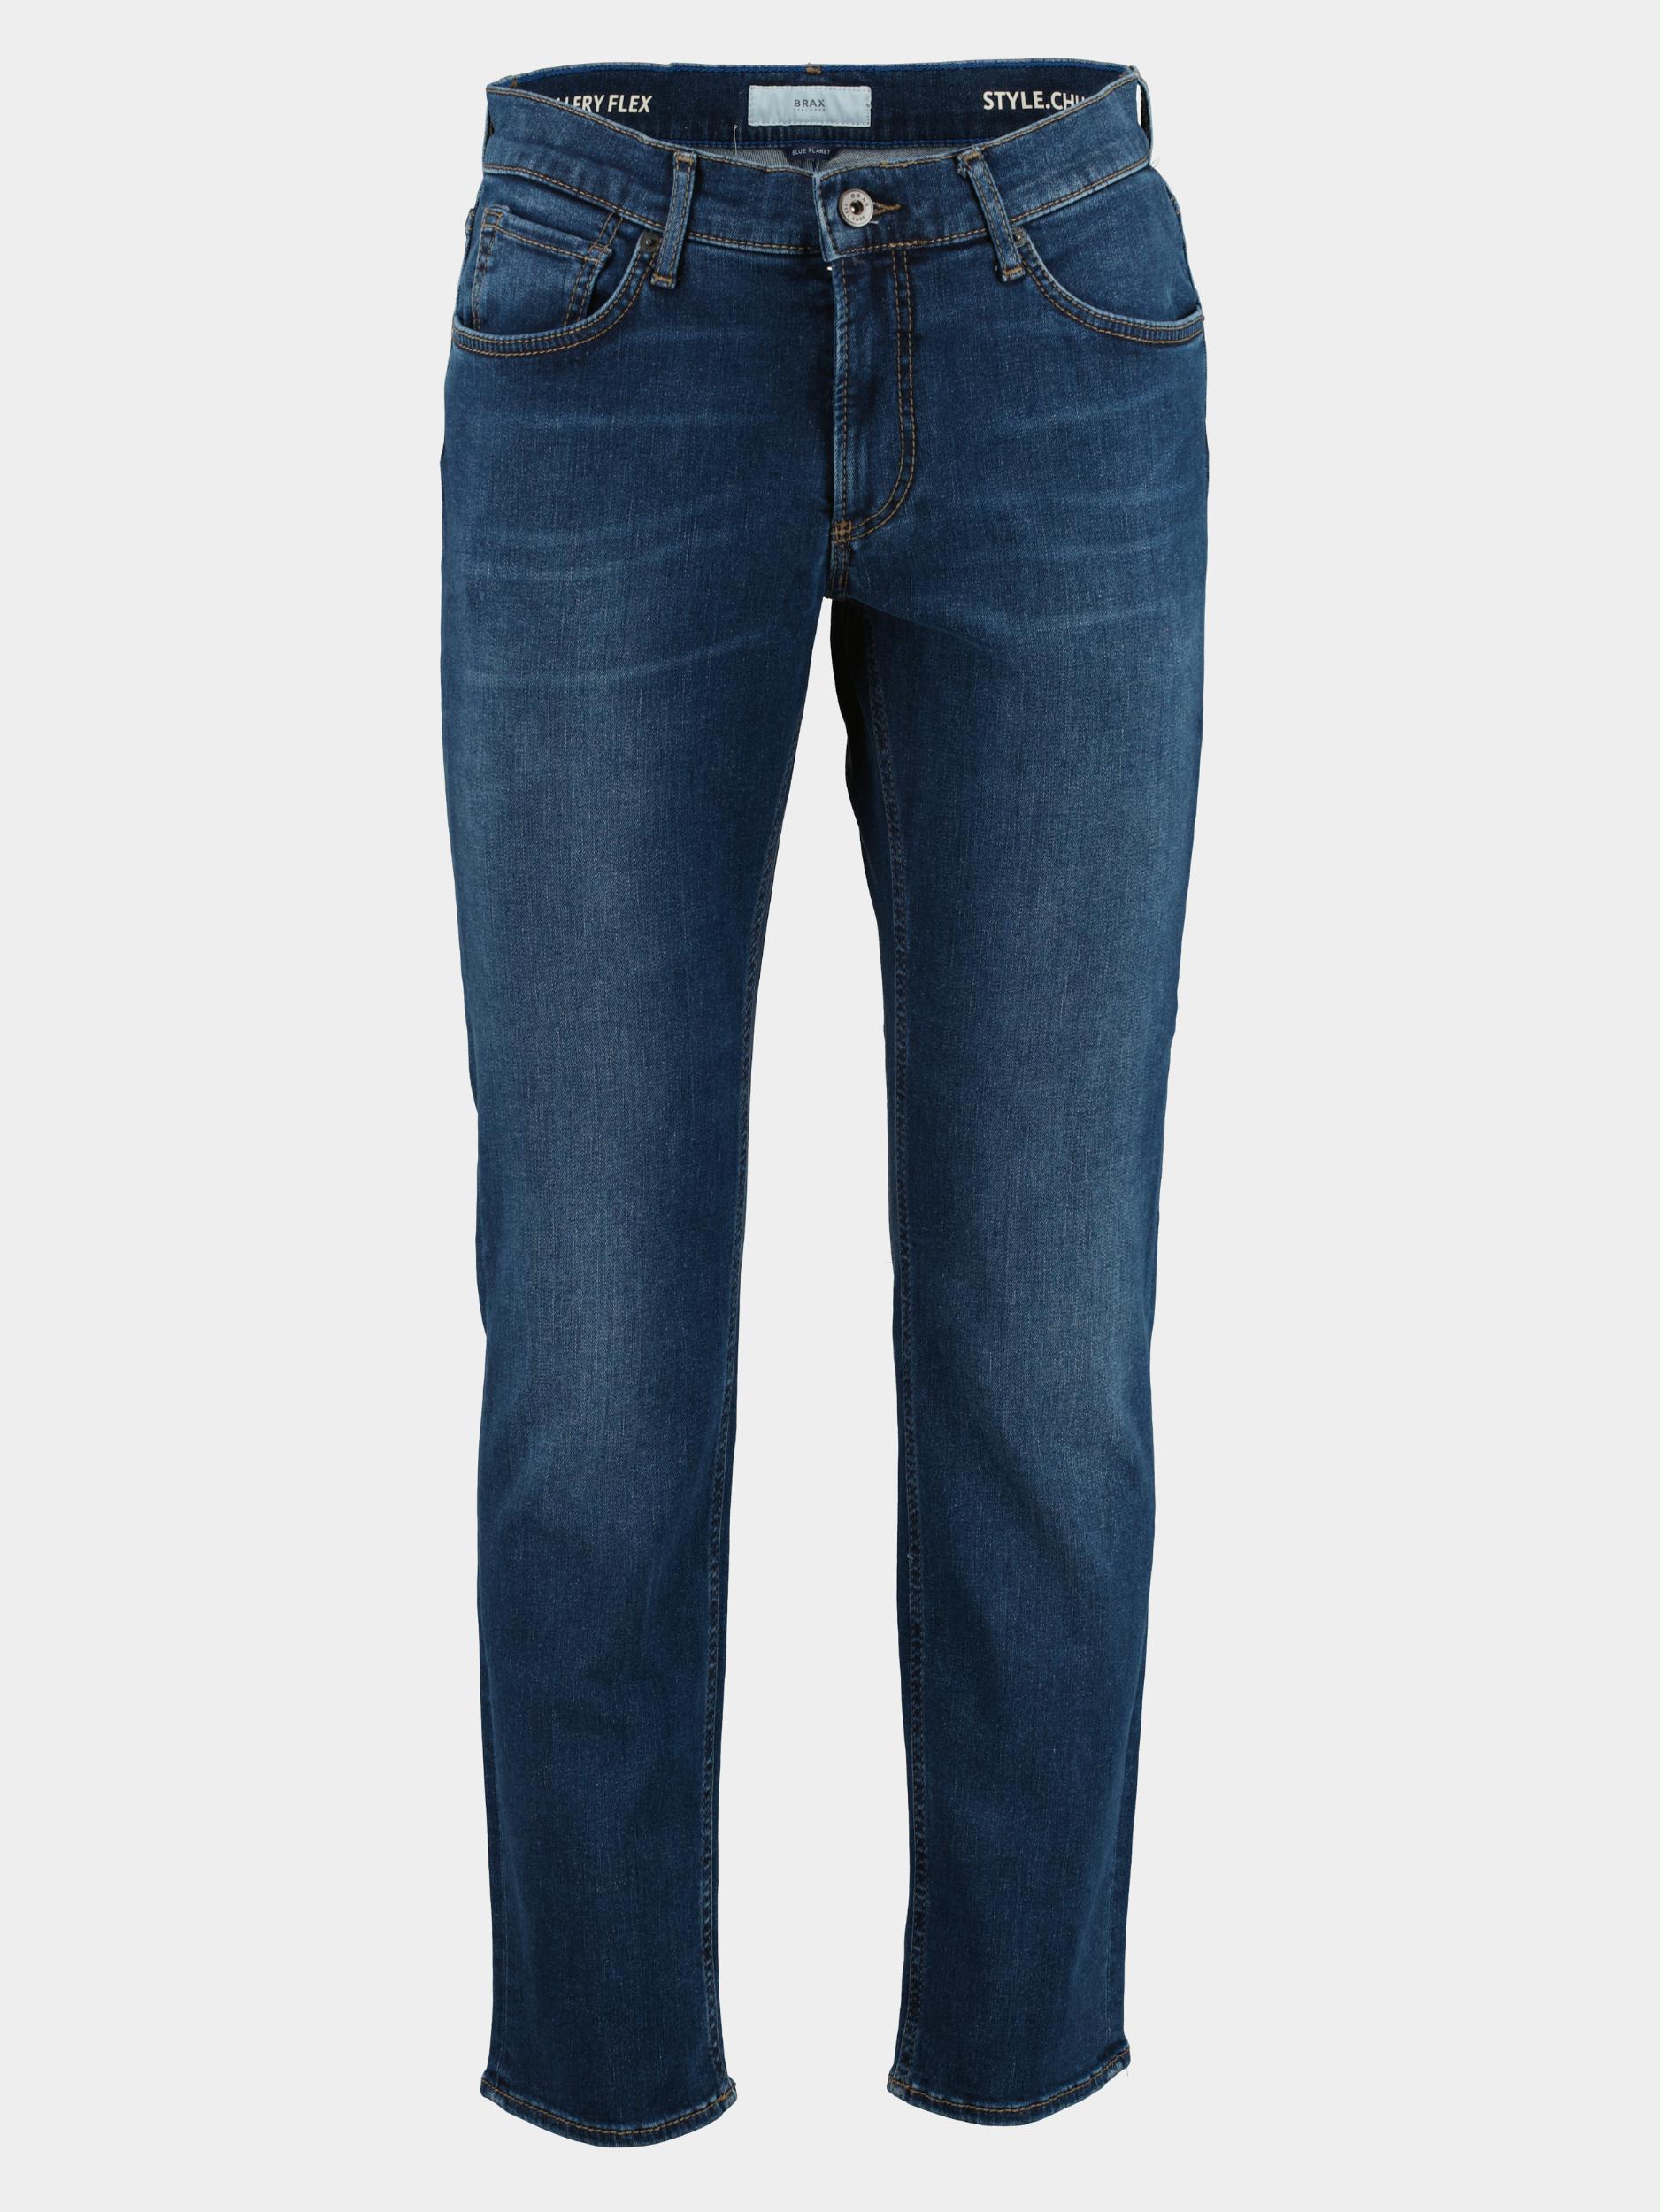 31% Korting Brax 5-Pocket Jeans Blauw STYLE.CHUCK 89-6154 07953020/23 | Bos  Men Shop